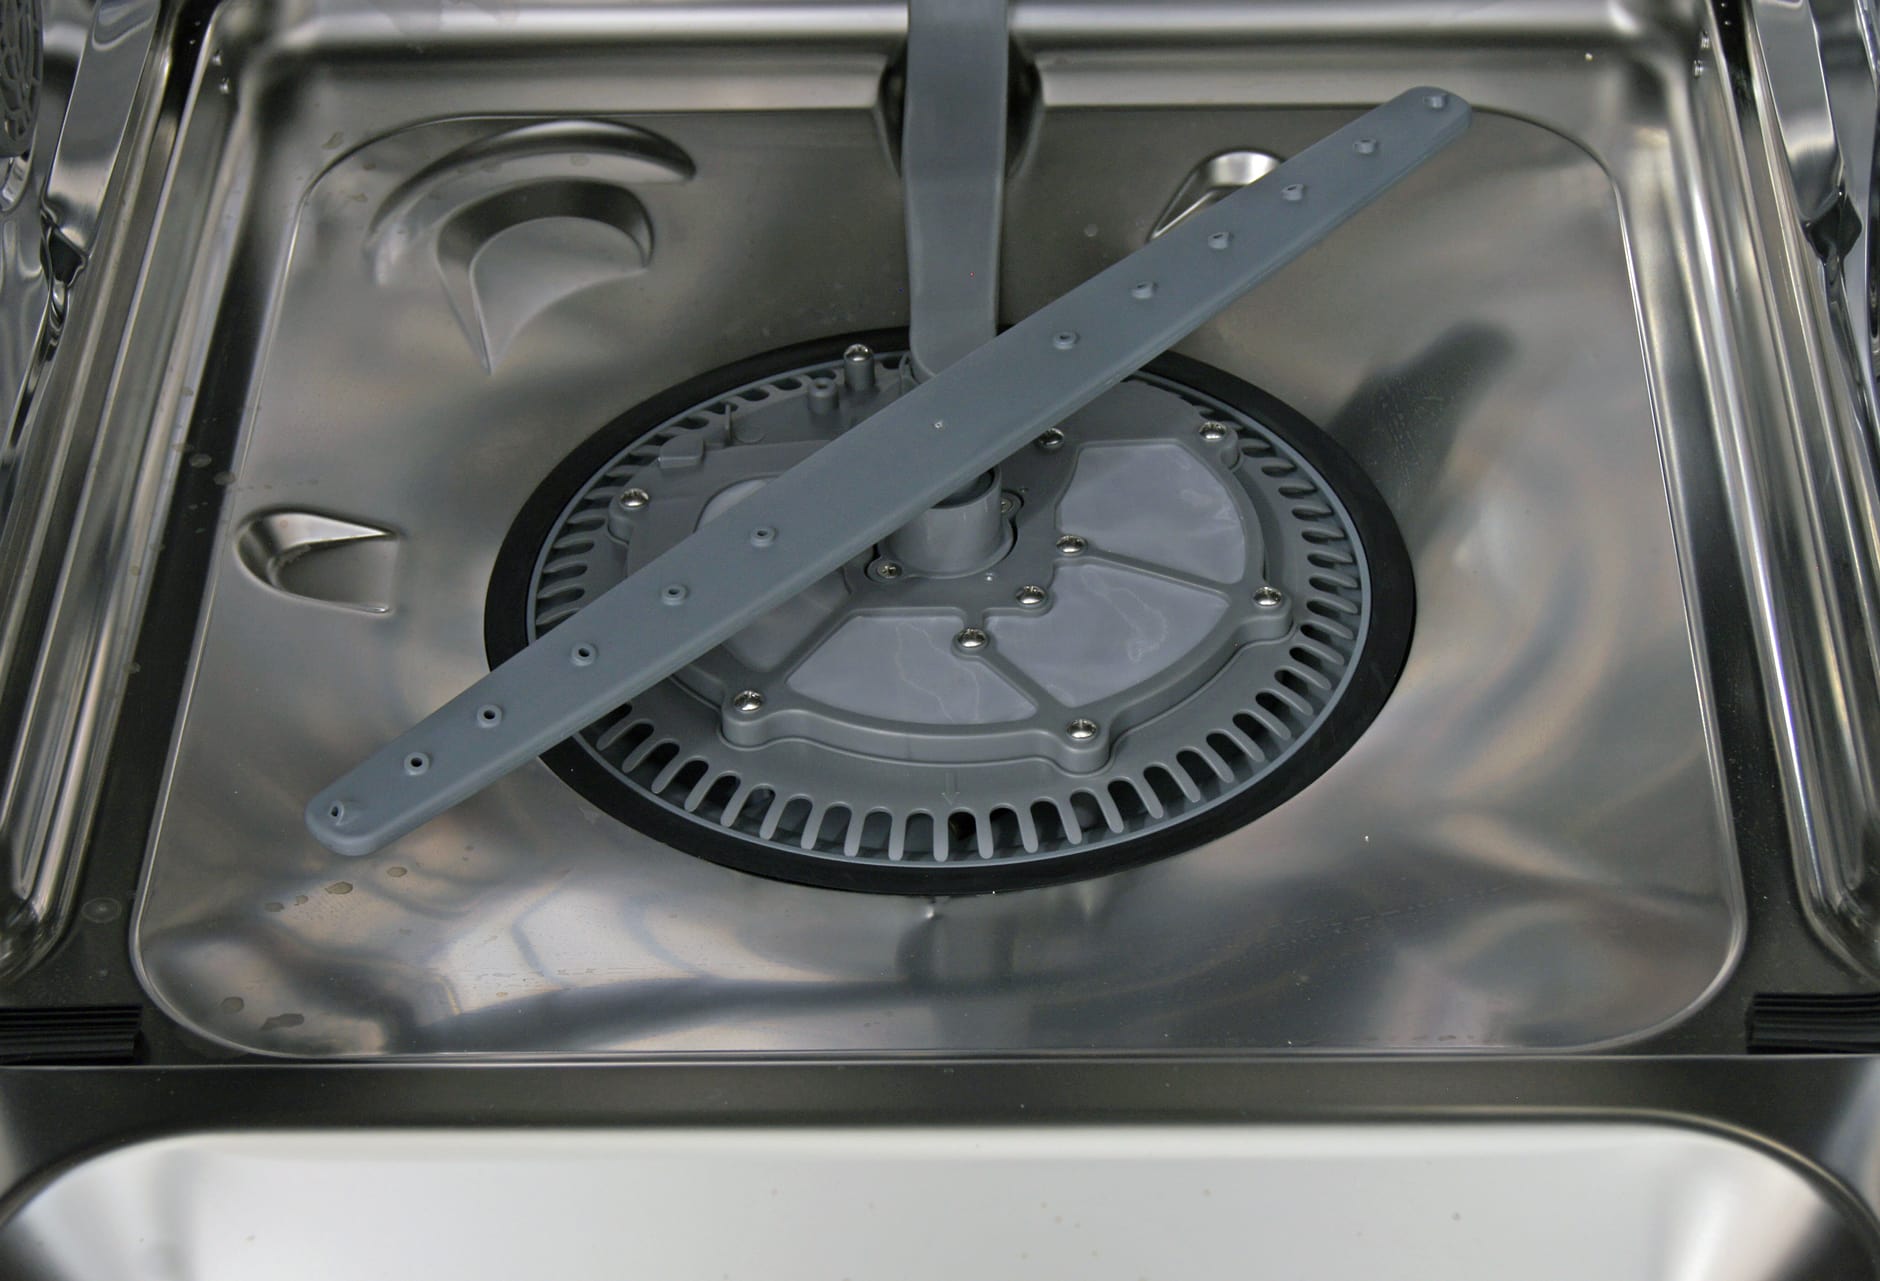 Dishwasher photo and guides: Cleaning Kitchenaid Dishwasher Filter